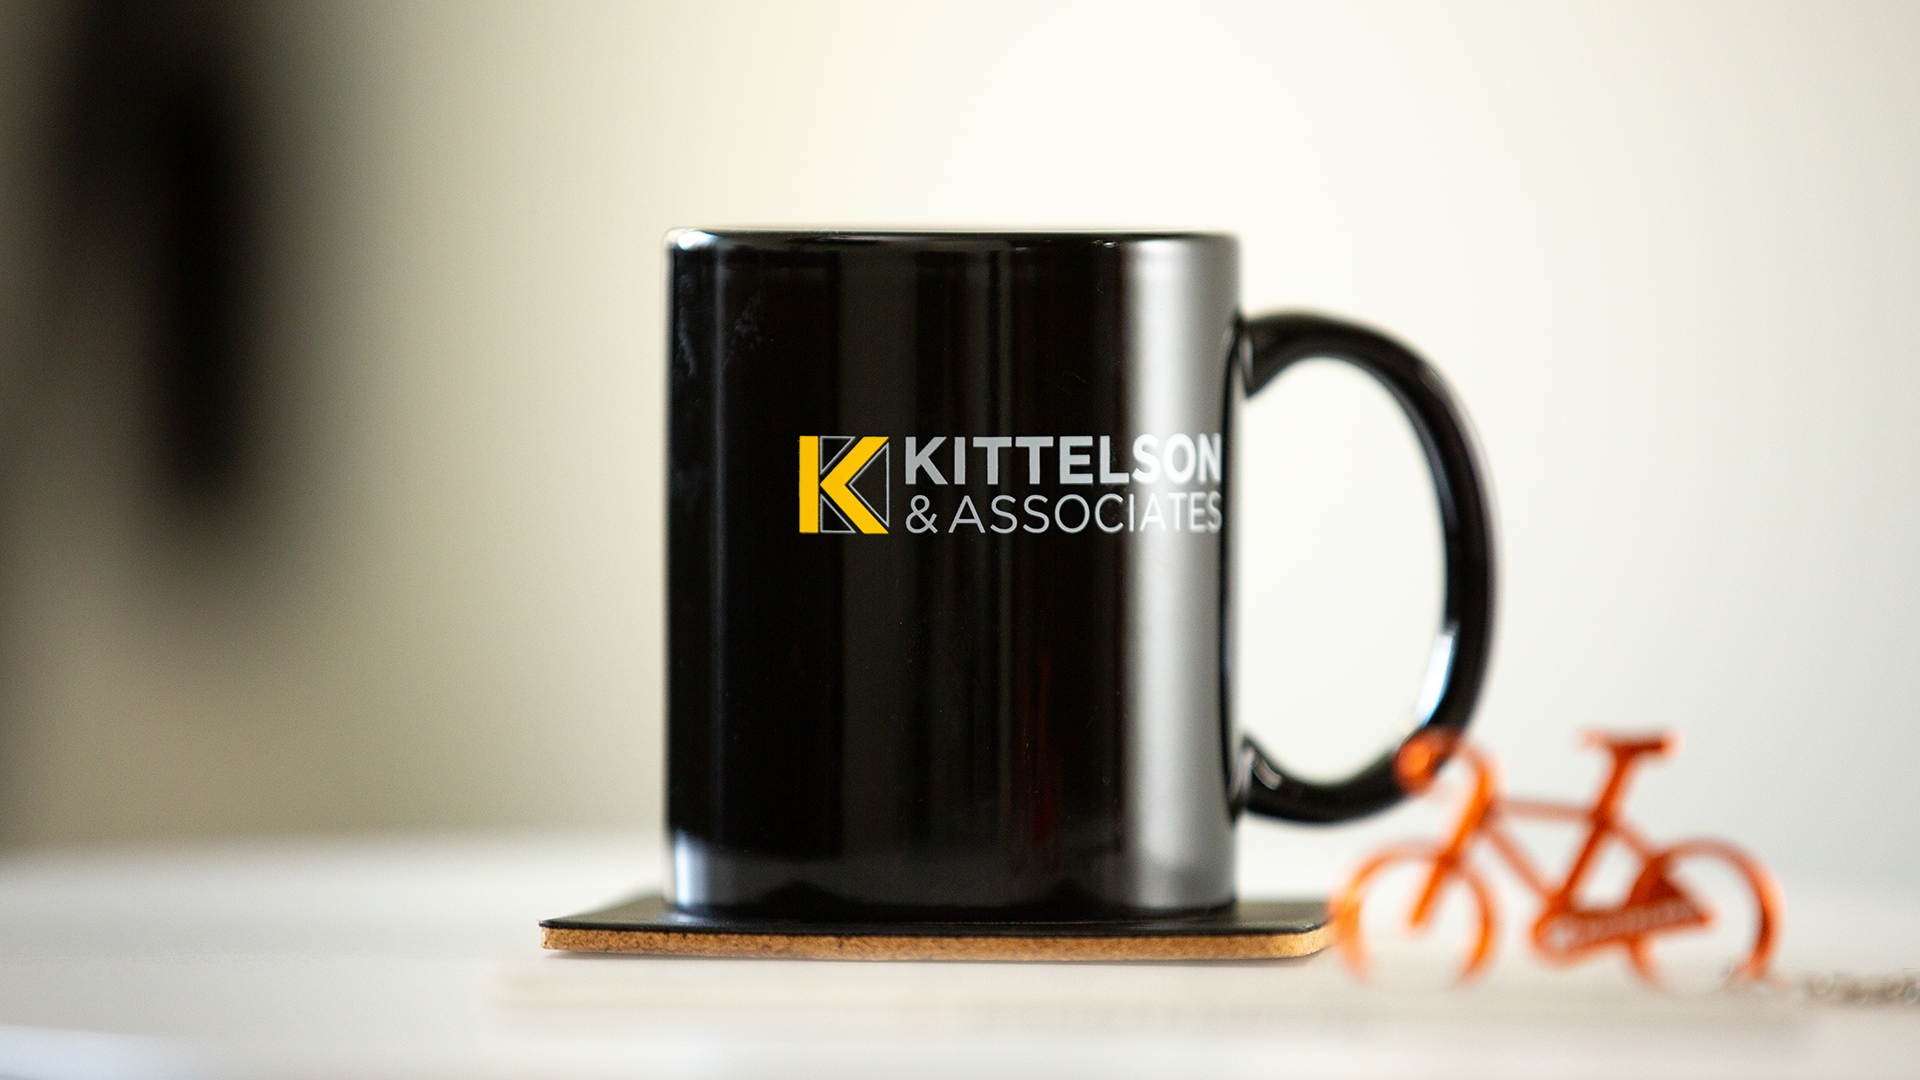 Kittelson coffee mug and bicycle keychain